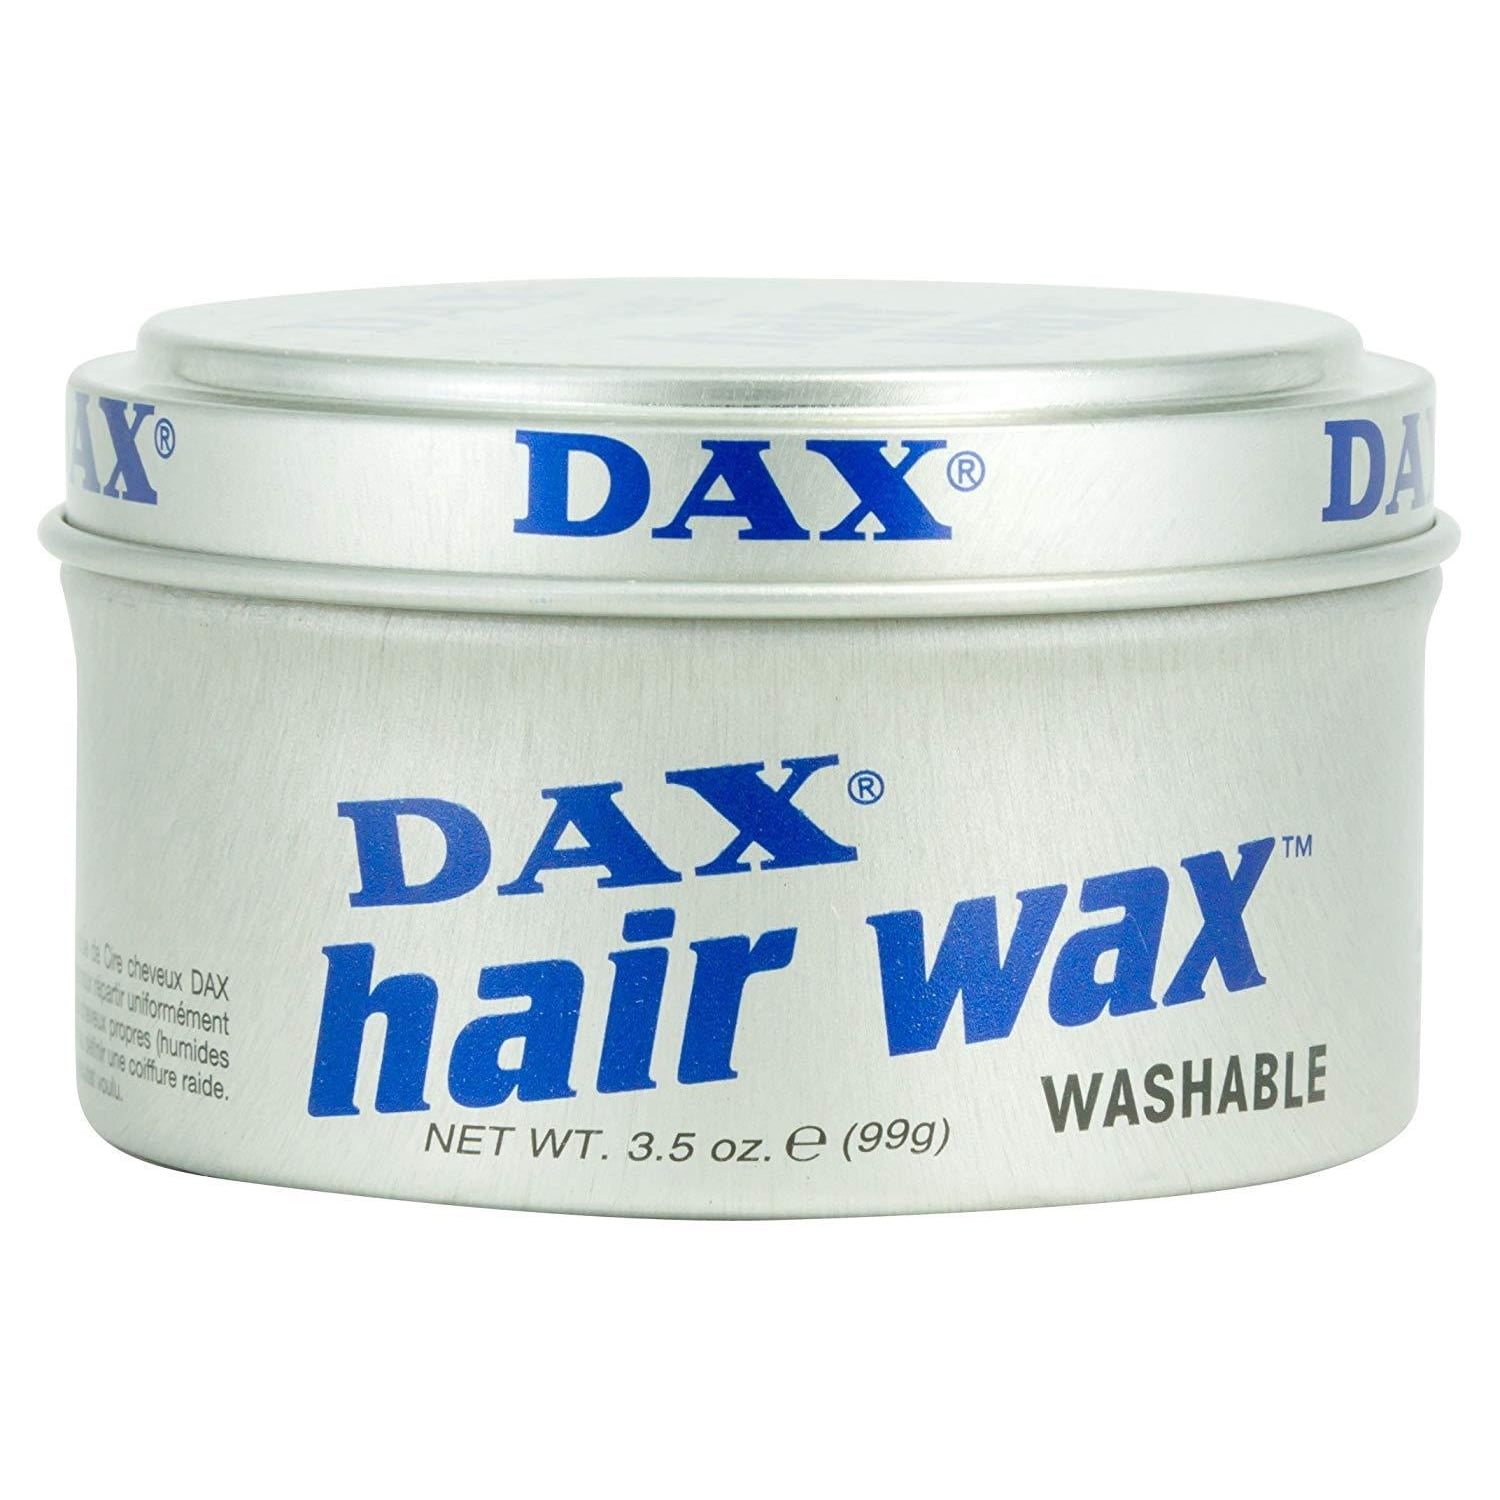 Dax wax